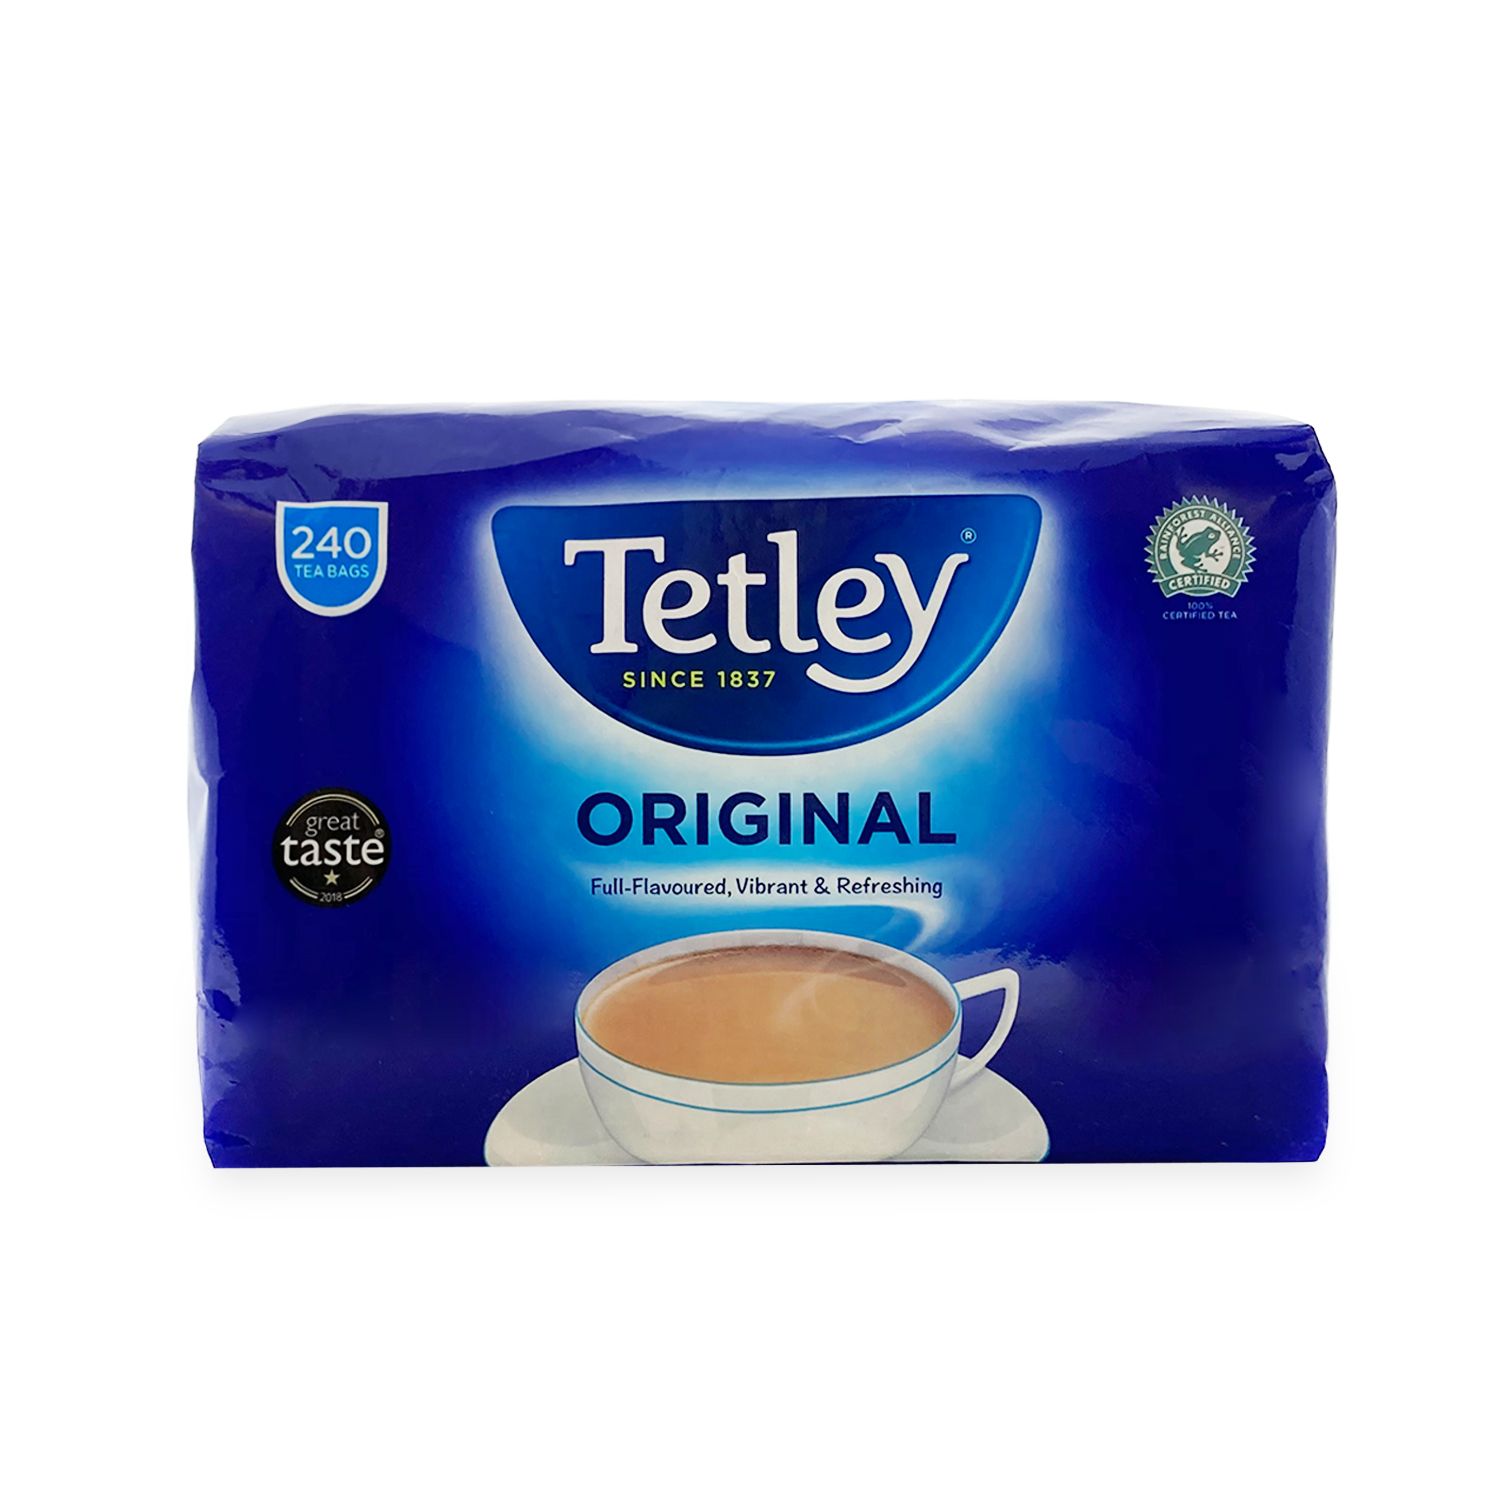 240 tetley tea bags